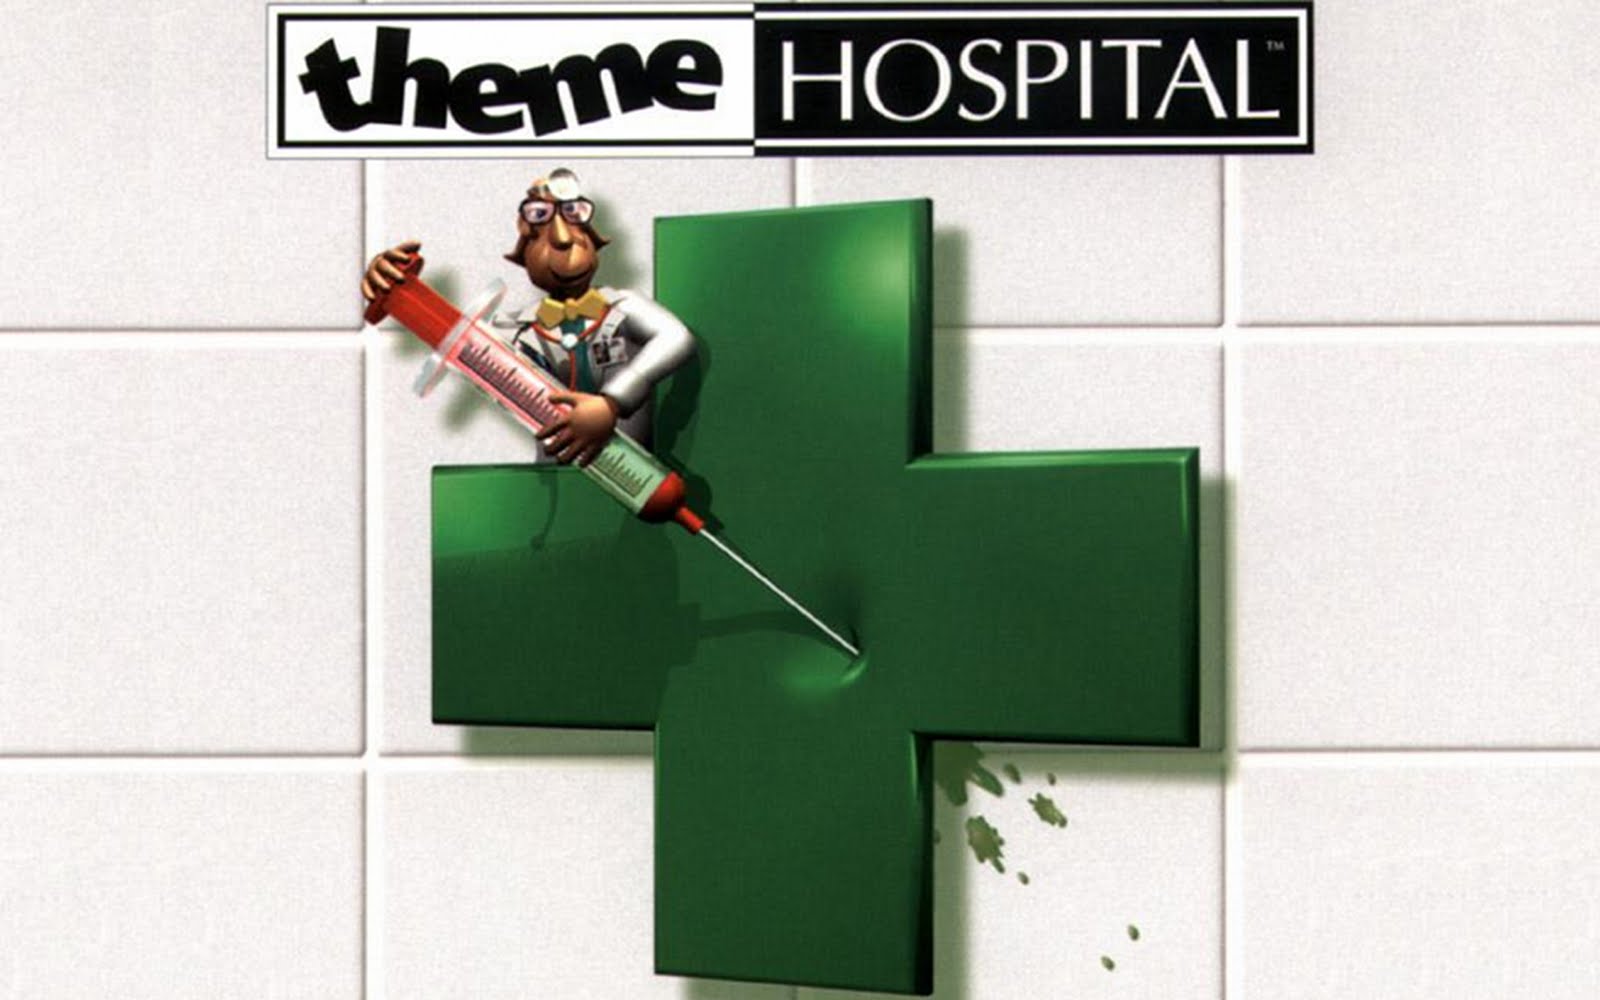 theme for hospital